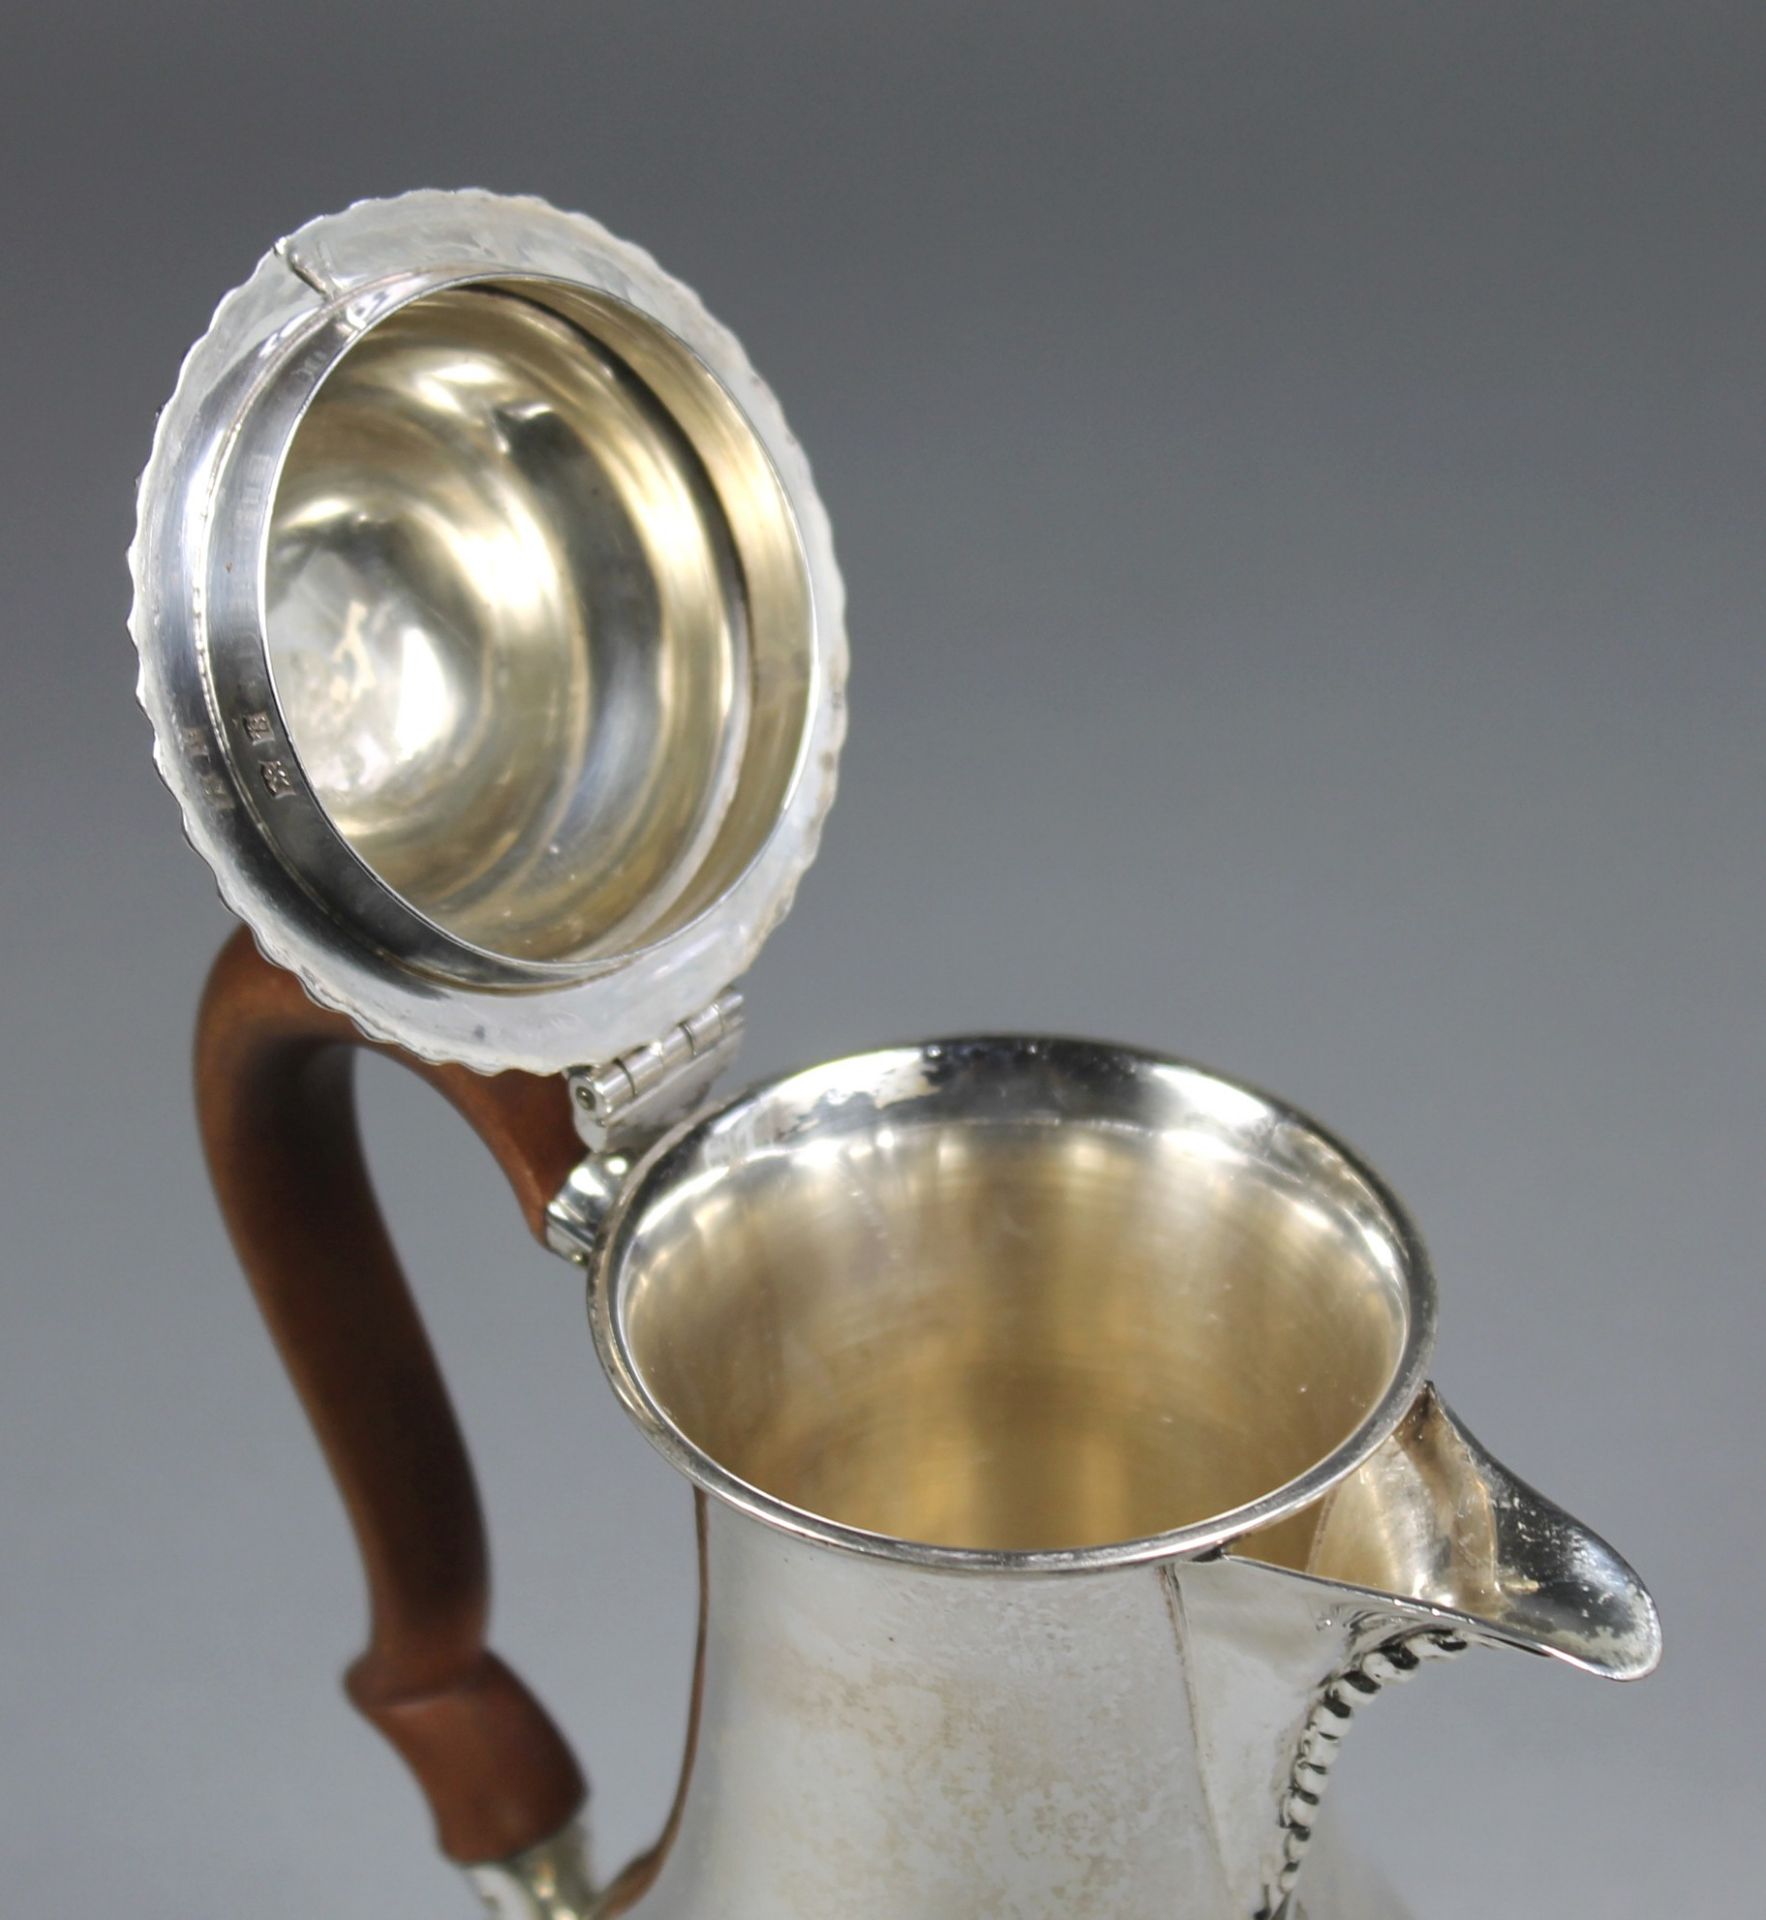 1 Kaffeekanne Silber (925/000), punziert, bauchige Form, mit geschwungenem Holzgriff, England, H ca. - Image 3 of 3